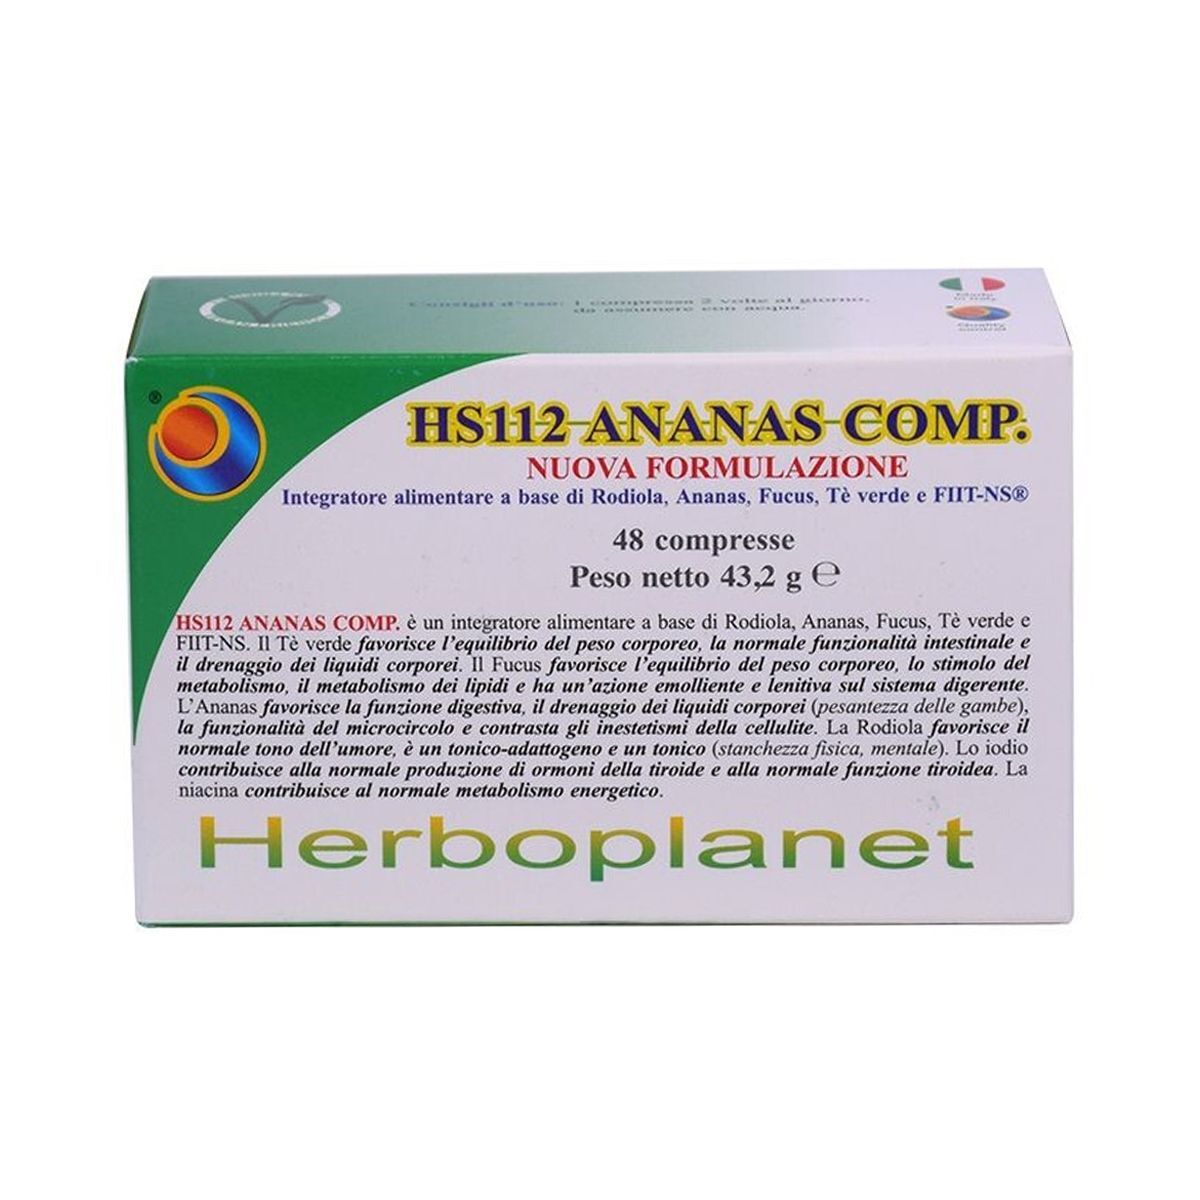 Herboplanet Hs112 Ananas Comp. Integratore Umore 48 Compresse